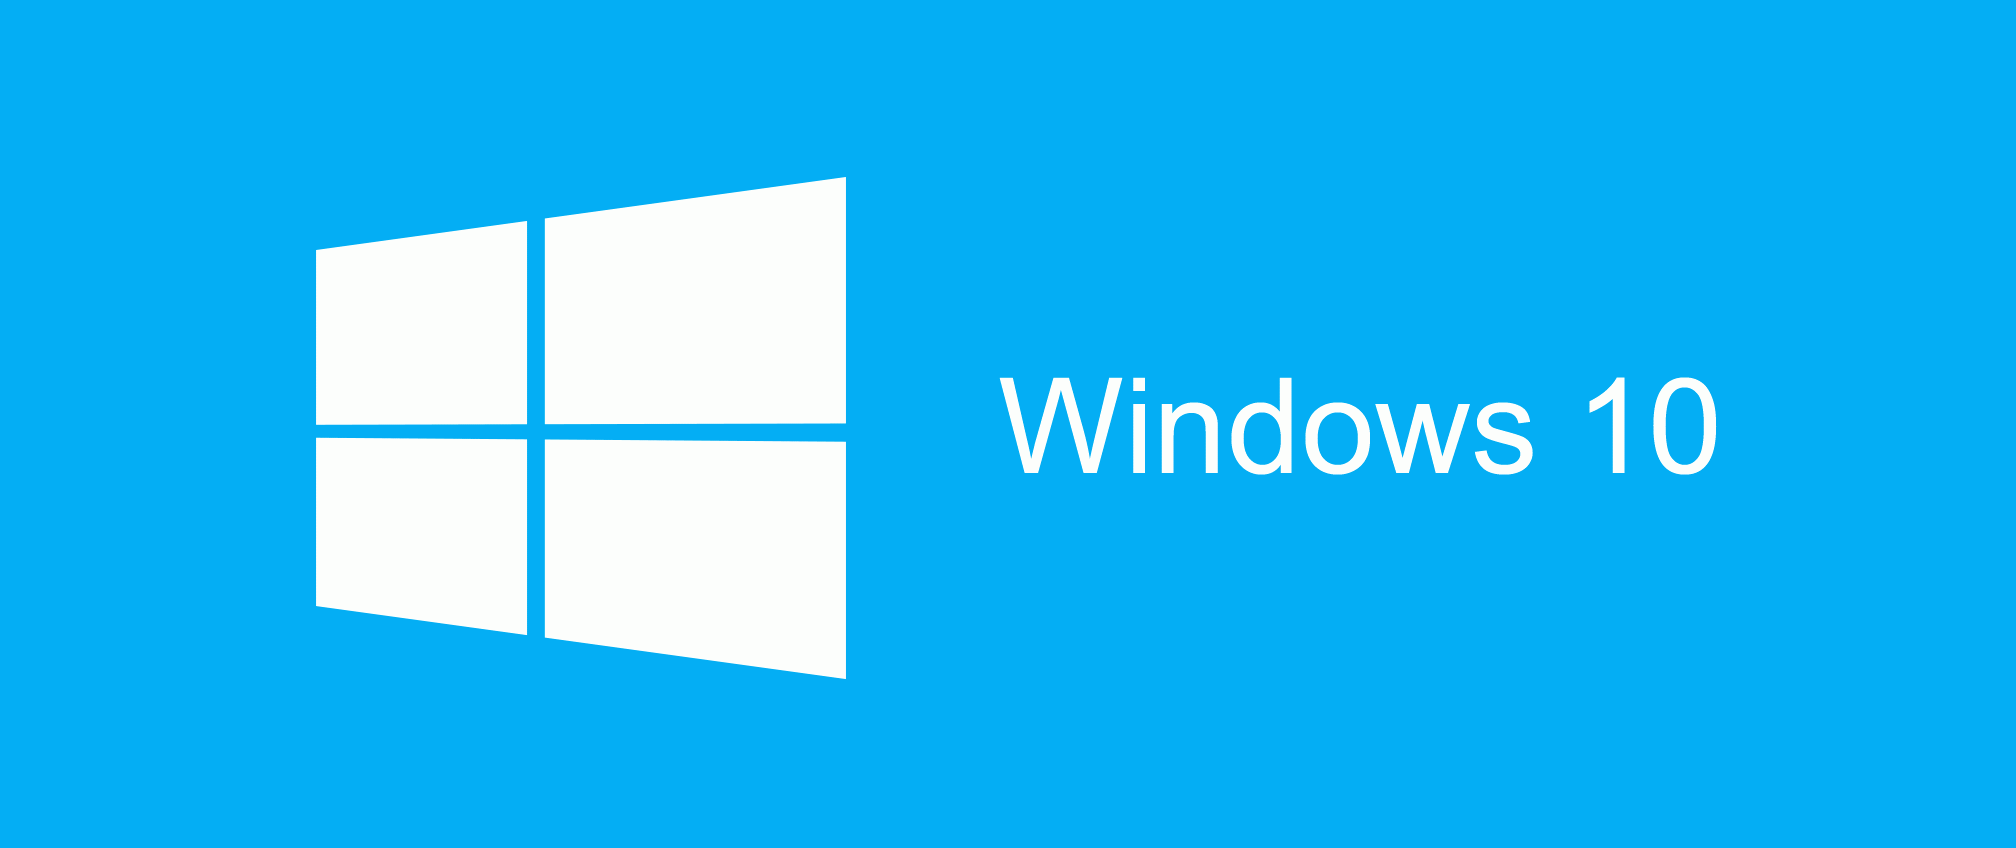 Windows Logo - Windows 10 Logo